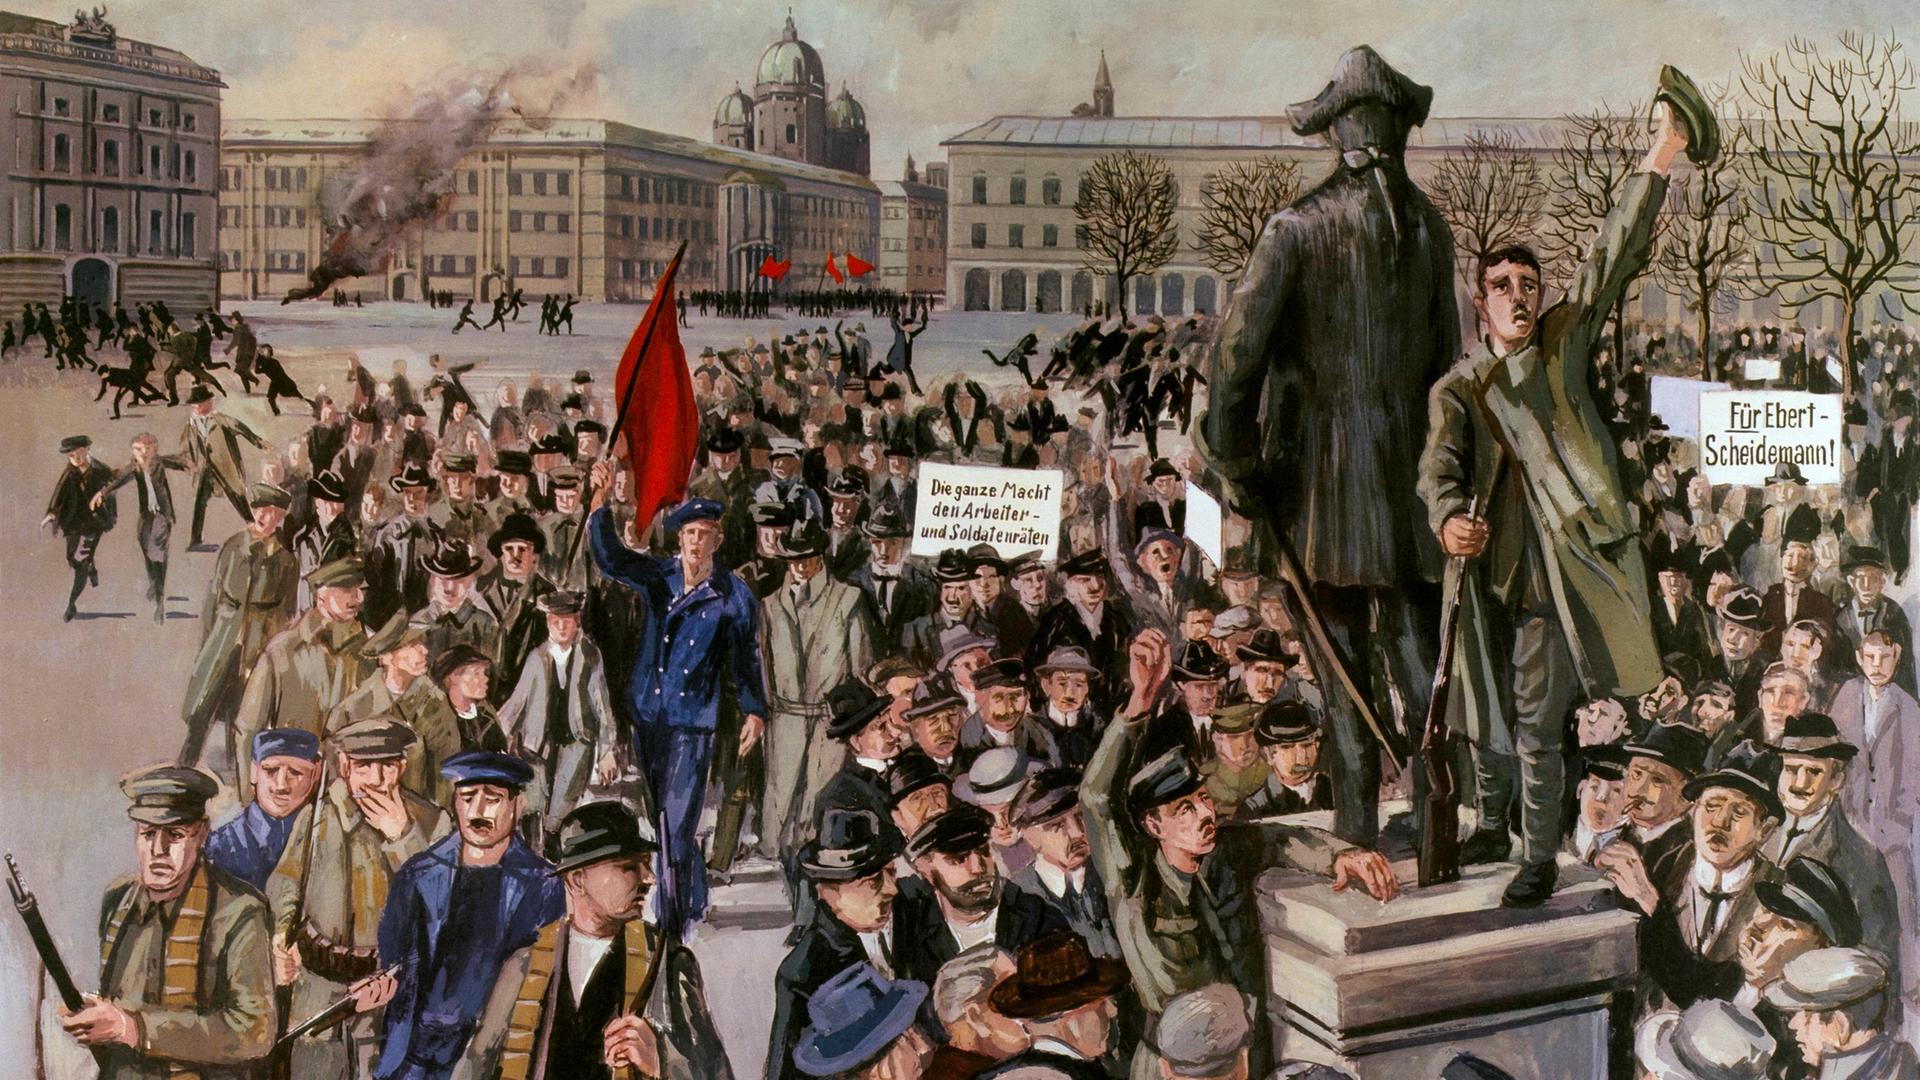 Schulwandbild zur Revolution 1918/19